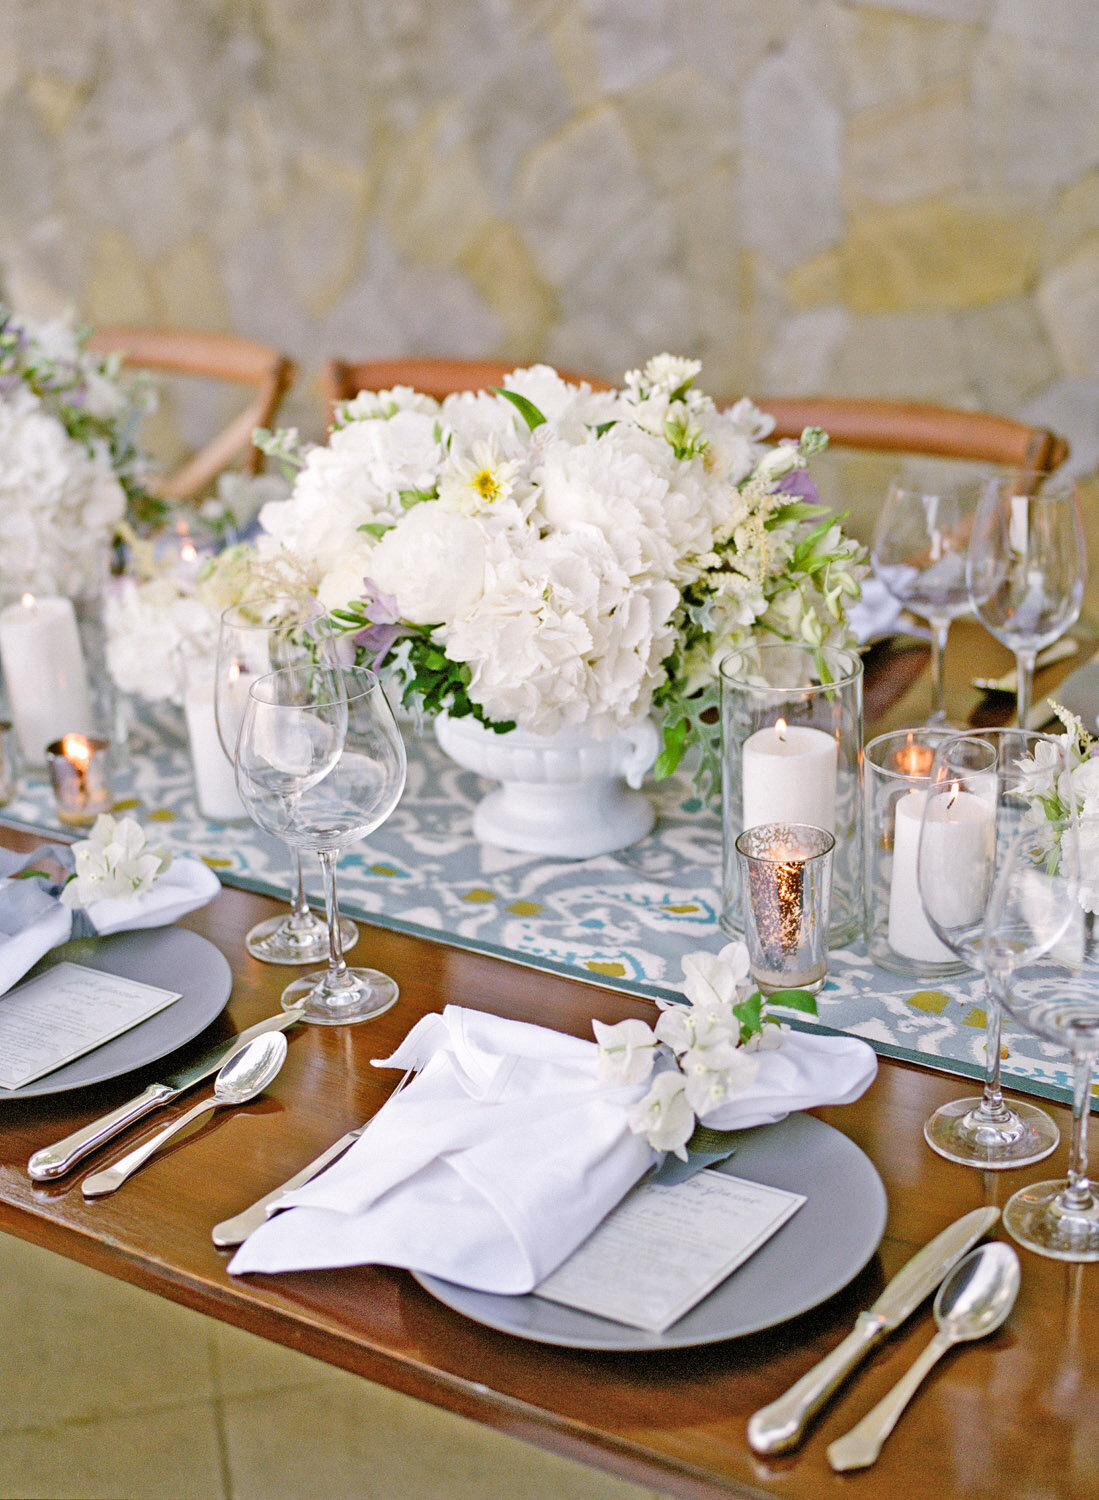 destination-wedding-bali-amankila-tabletop-white-hydrangea-gray-plates-blue-print-table-runner